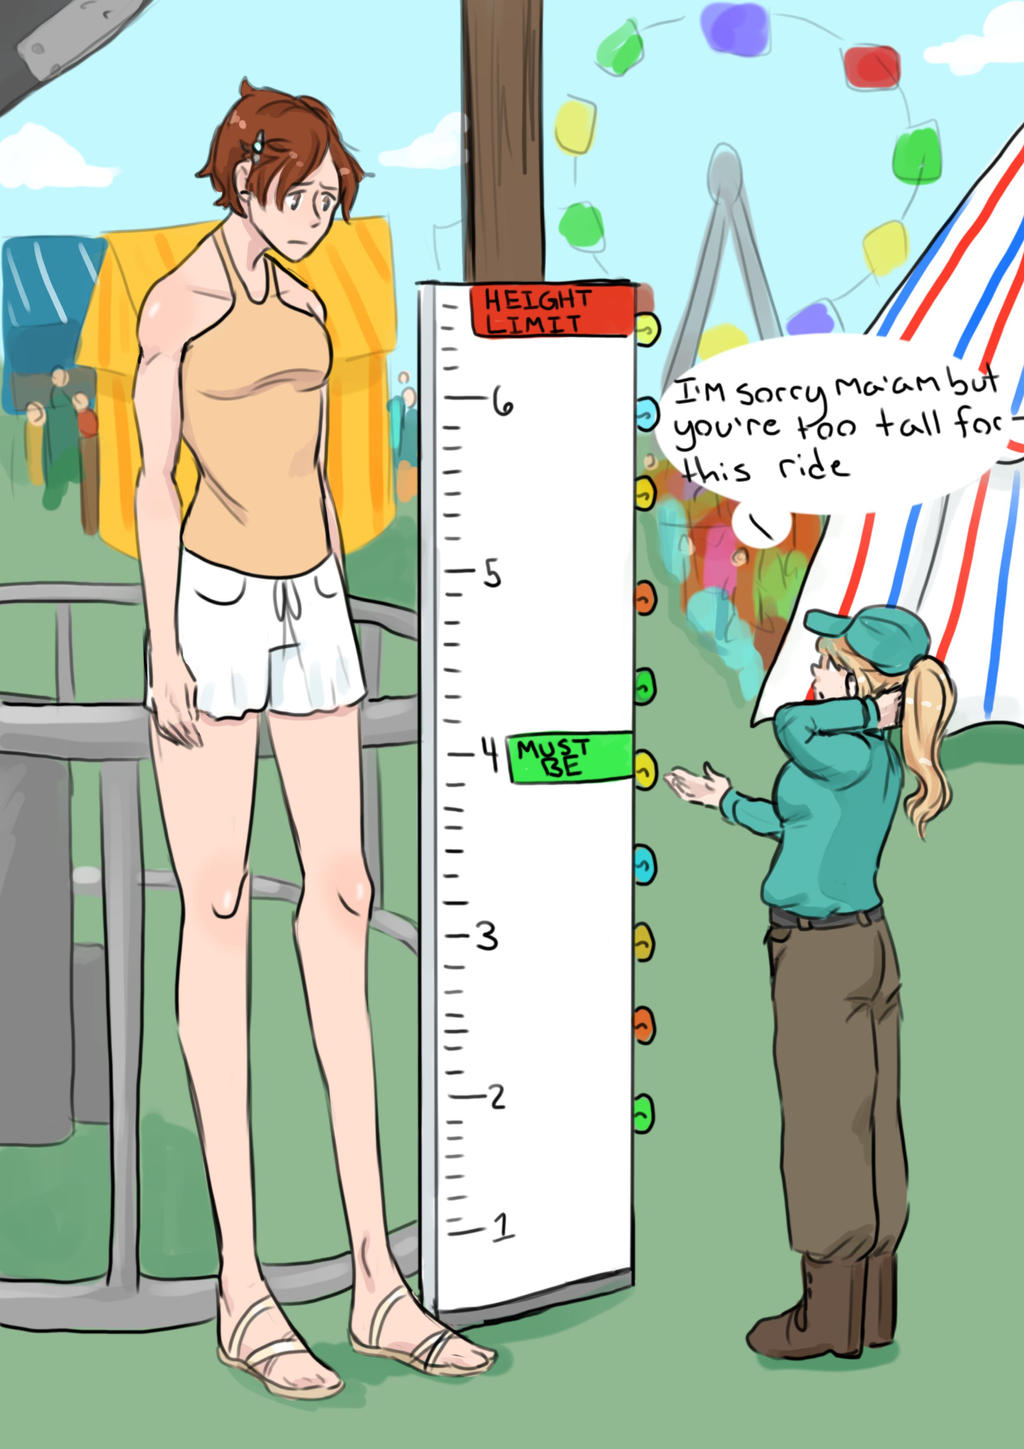 Height Check by appplegator on DeviantArt